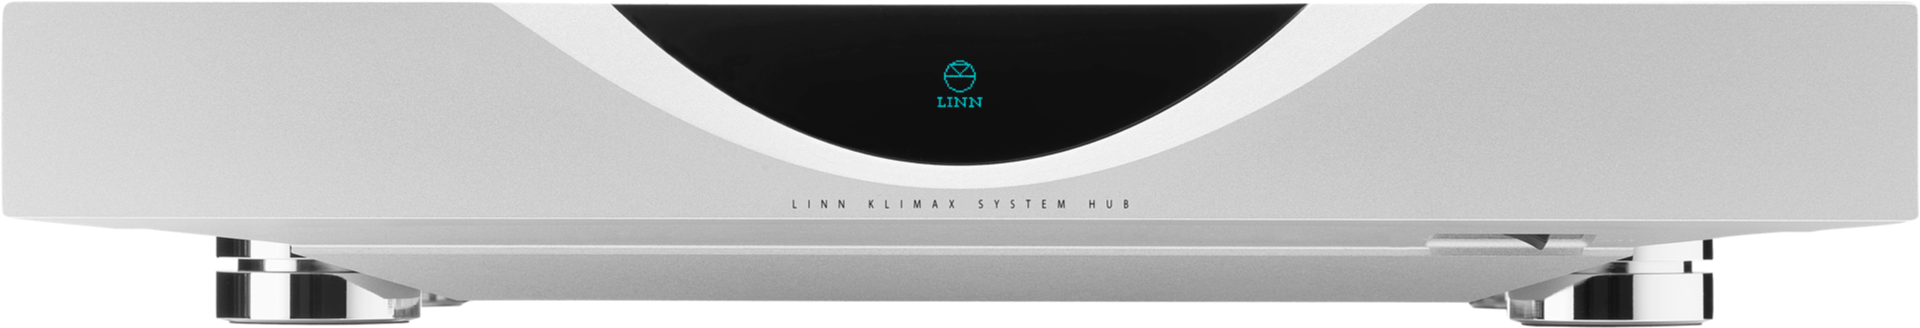 Linn Klimax System Hub music streamer